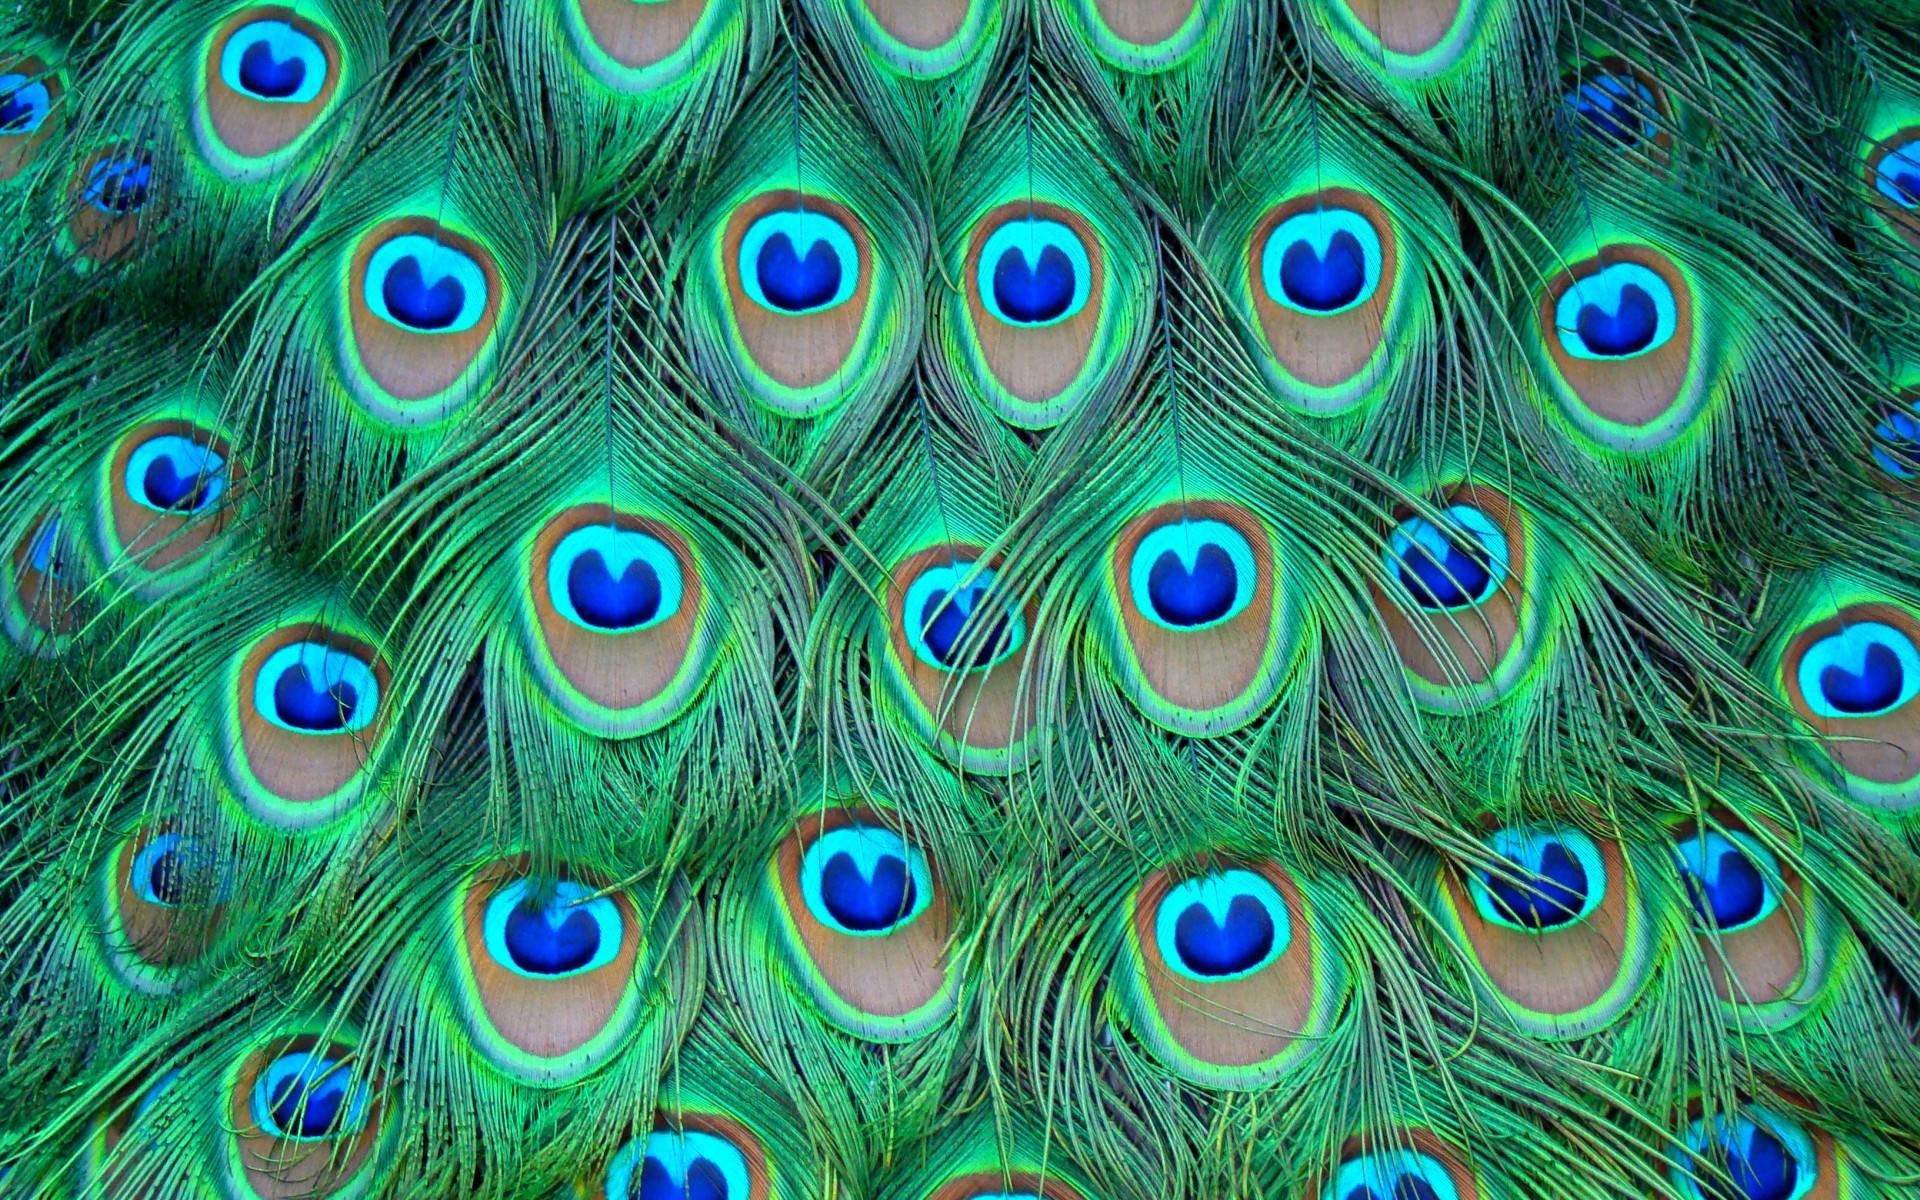 1920x1200 Pin Peacock Feathers Galaxy Desktop Wallpaper Download on Pinterest